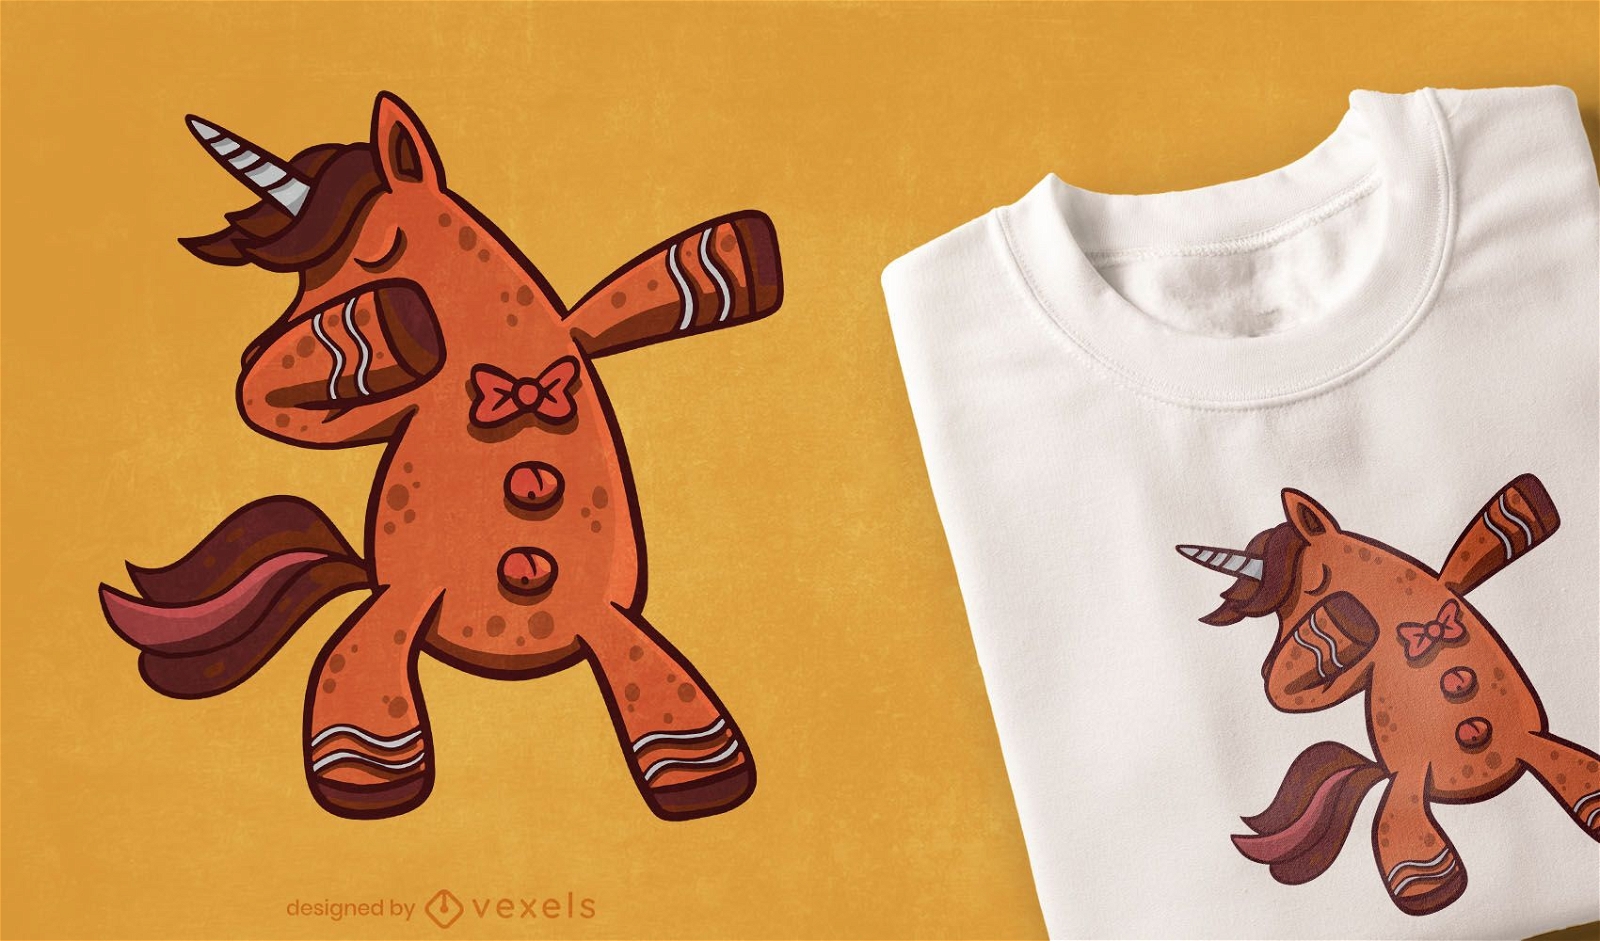 Gingerbread unicorn t-shirt design